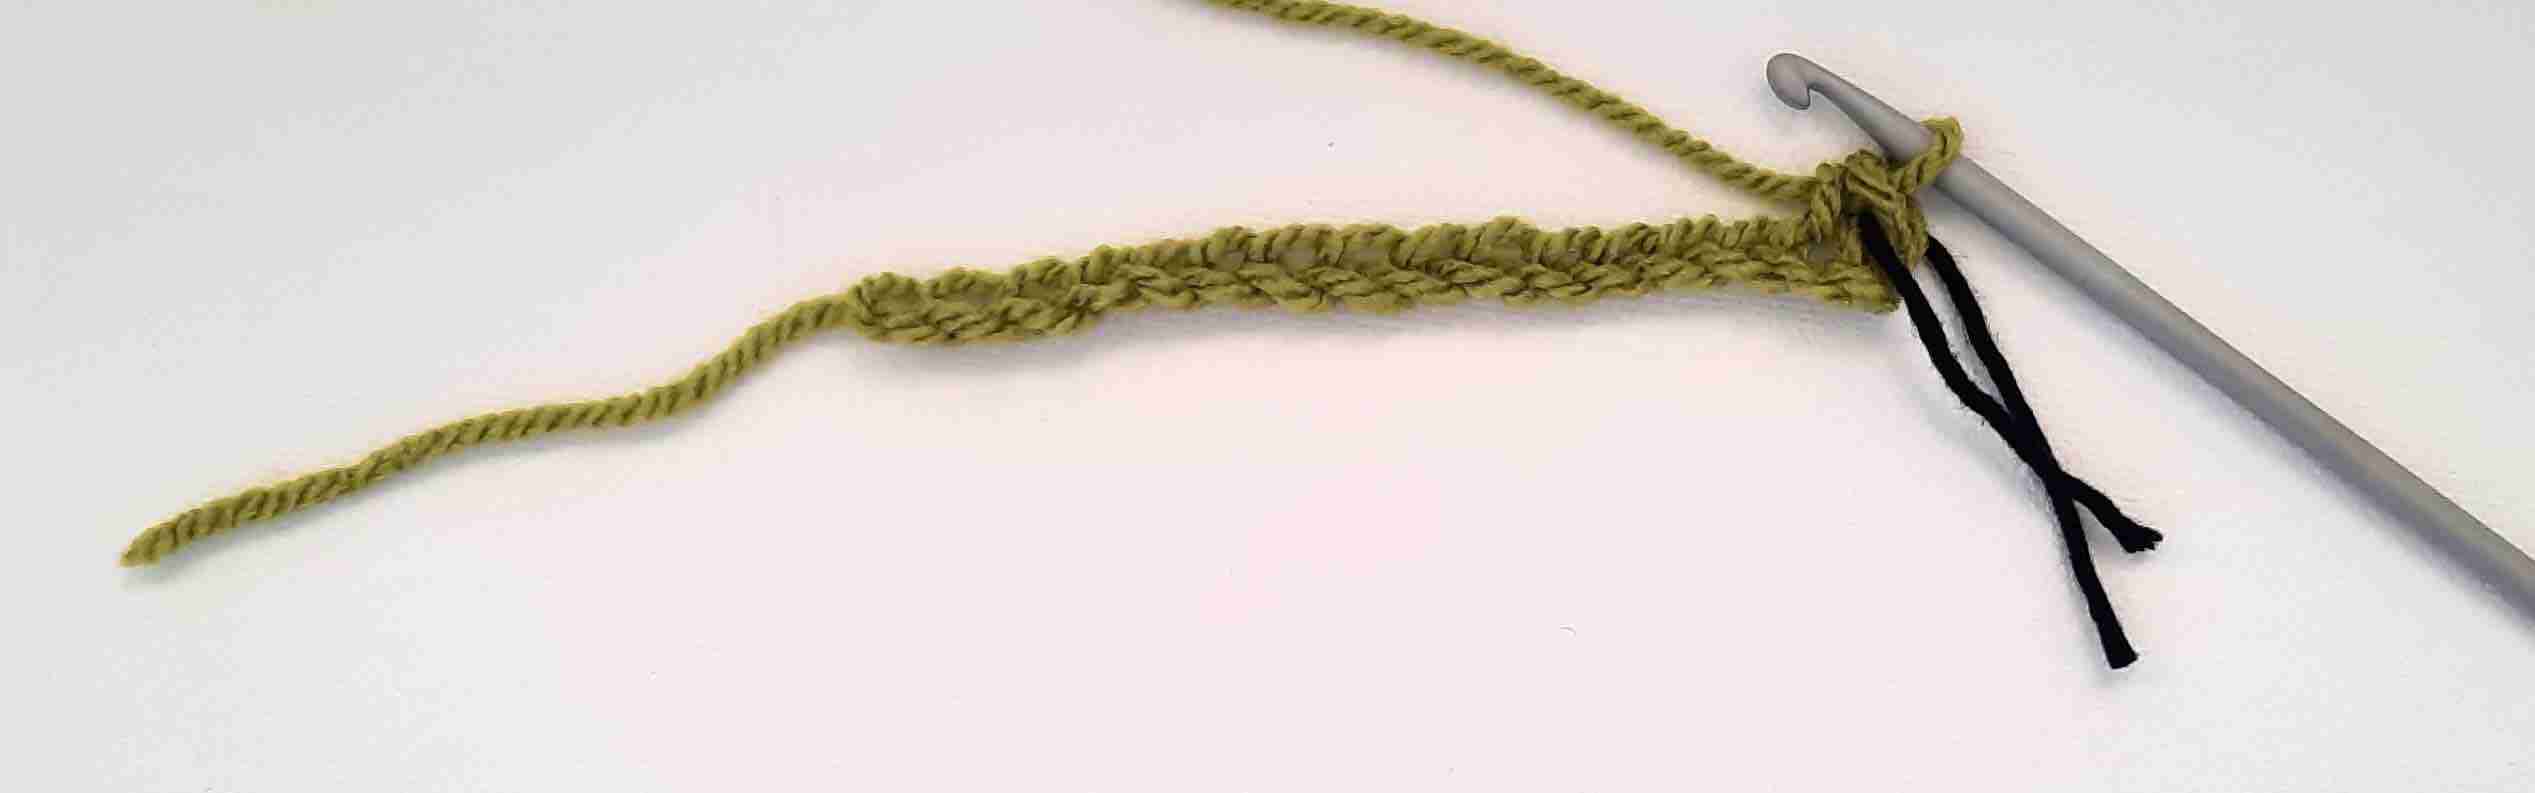 Crochet Straight Edges Every Time Row 1